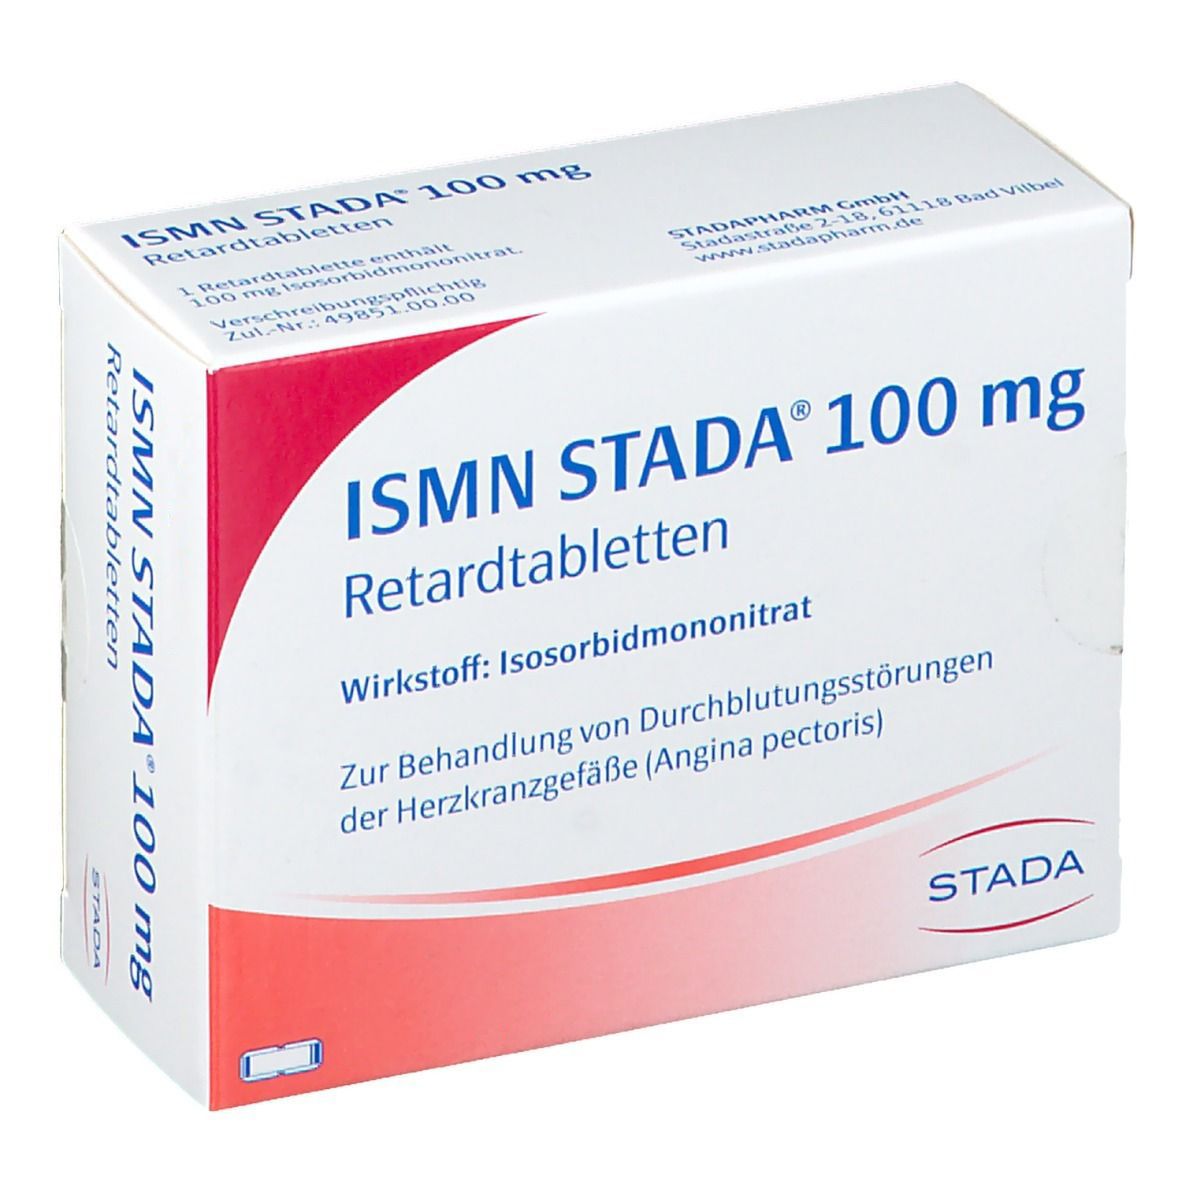 ISMN STADA® 100 mg Retardtabletten